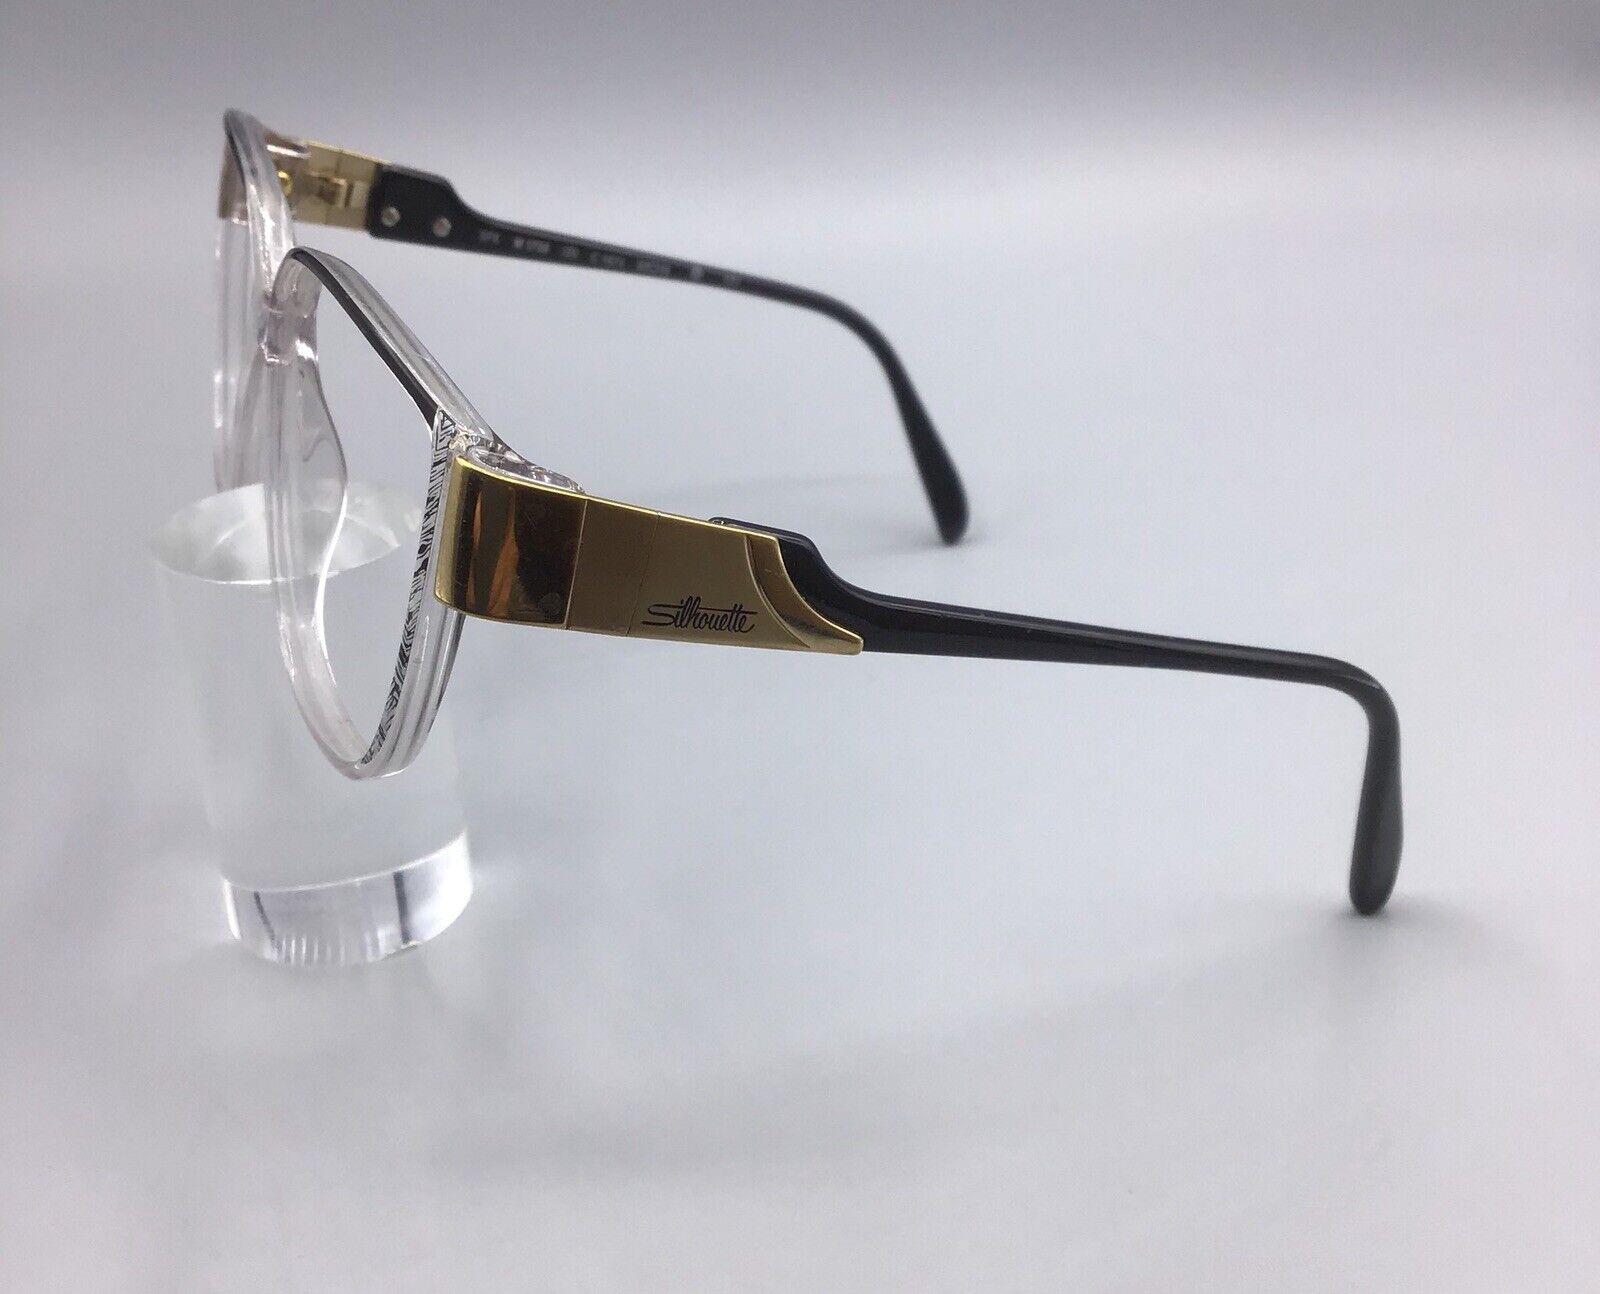 Silhouette occhiale Eyewear frame vintage SPX M1758 /20 c1875 brillen lunettes